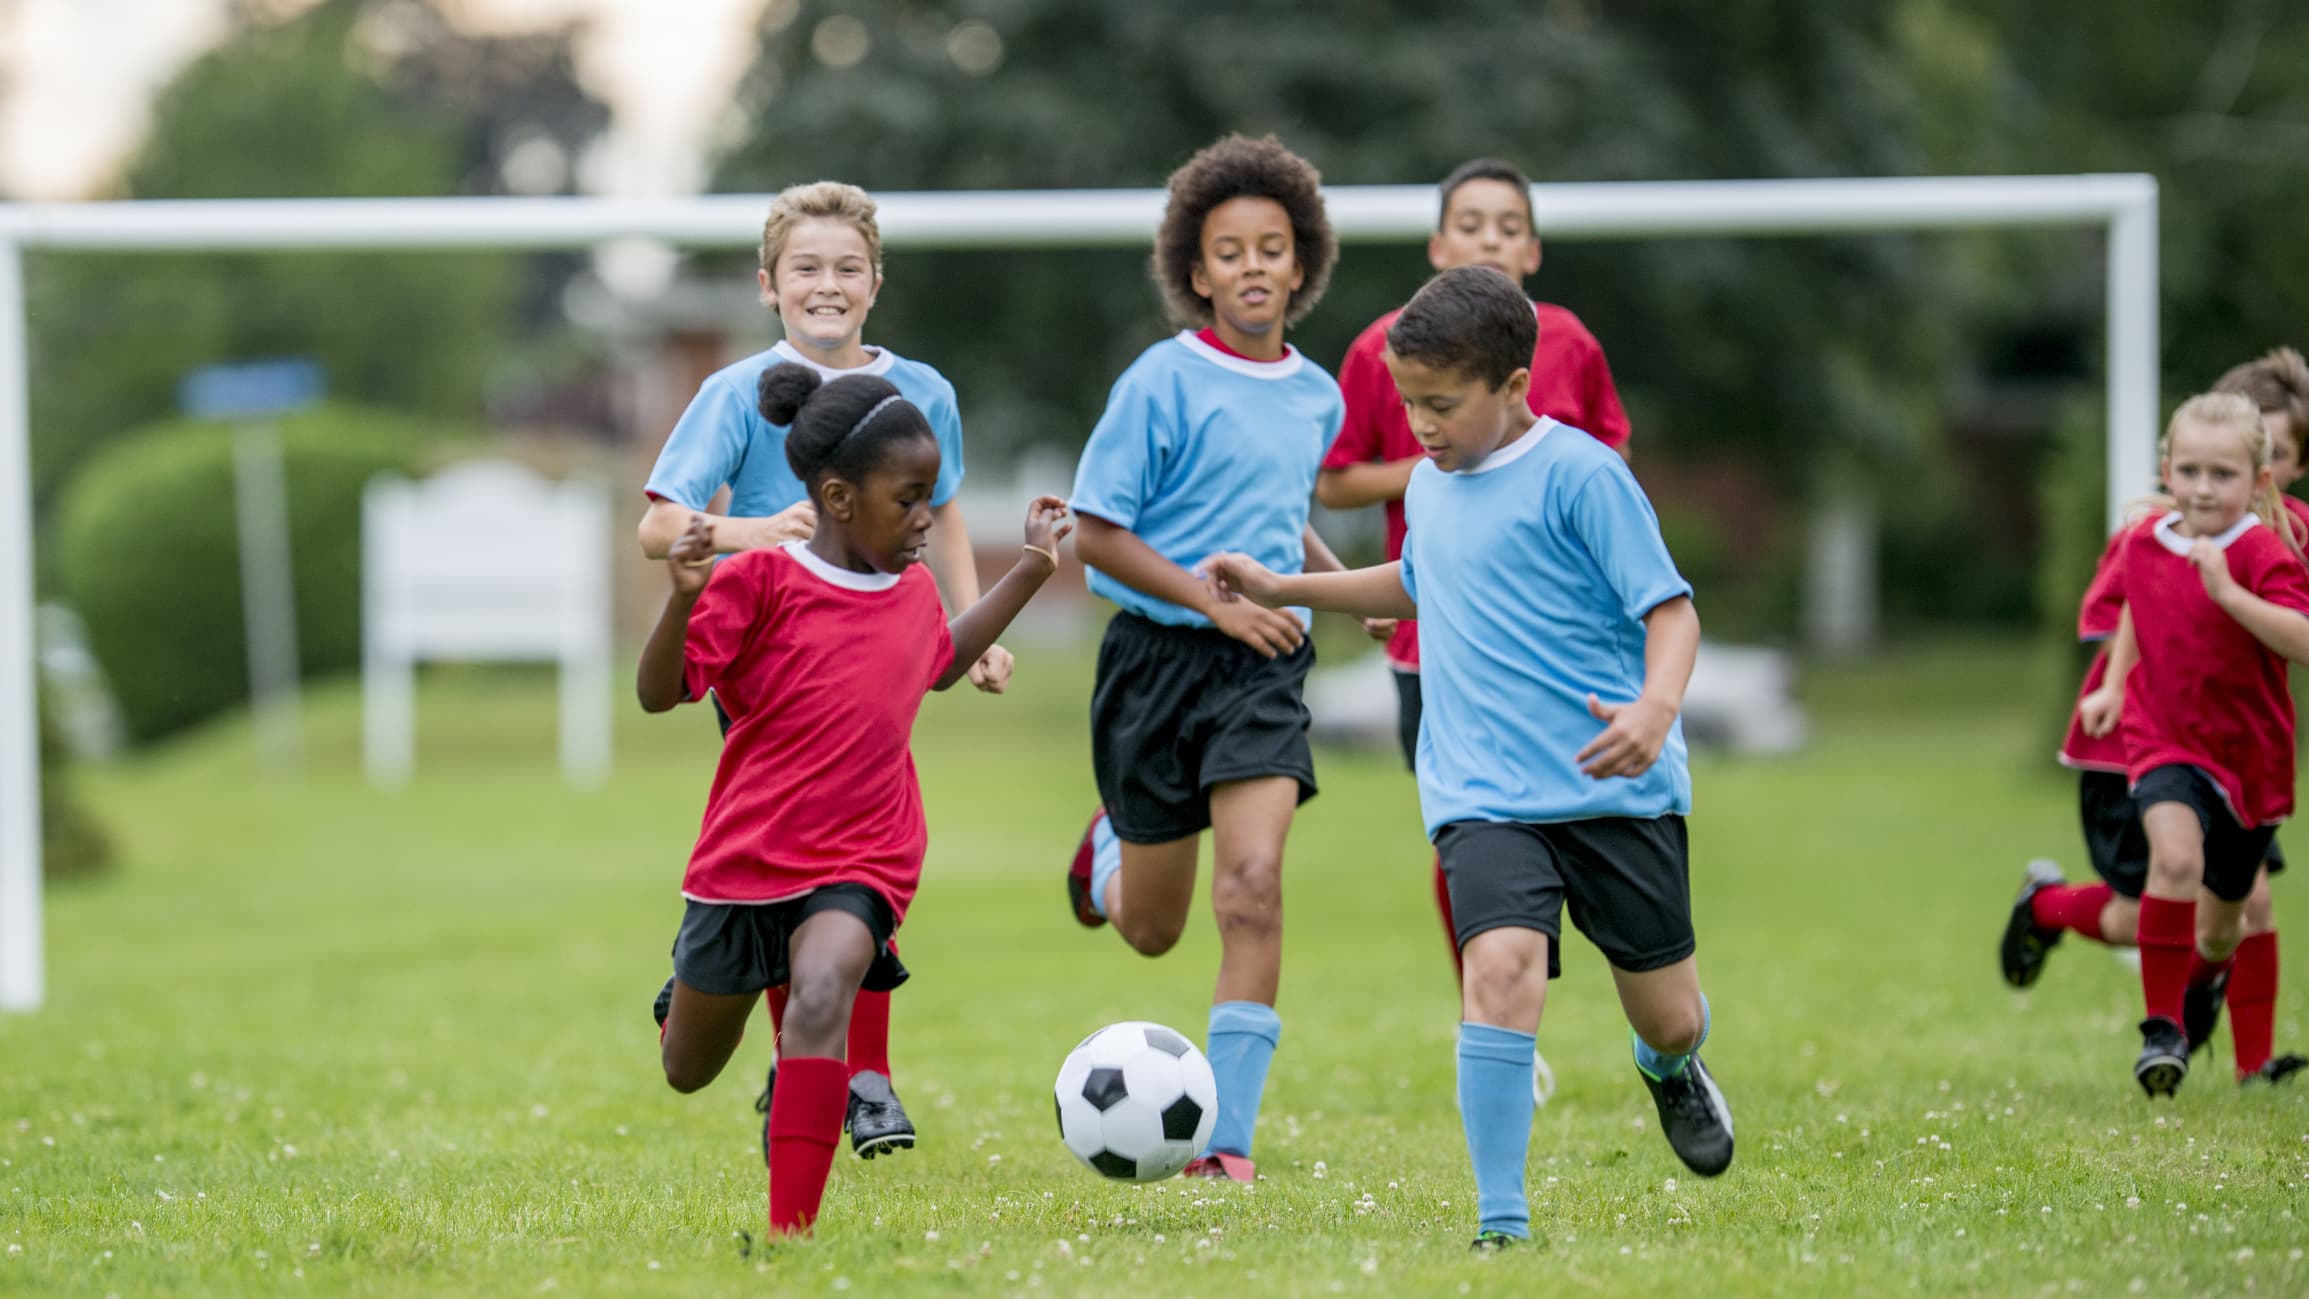 Children Chasing Soccer Ball During a Match